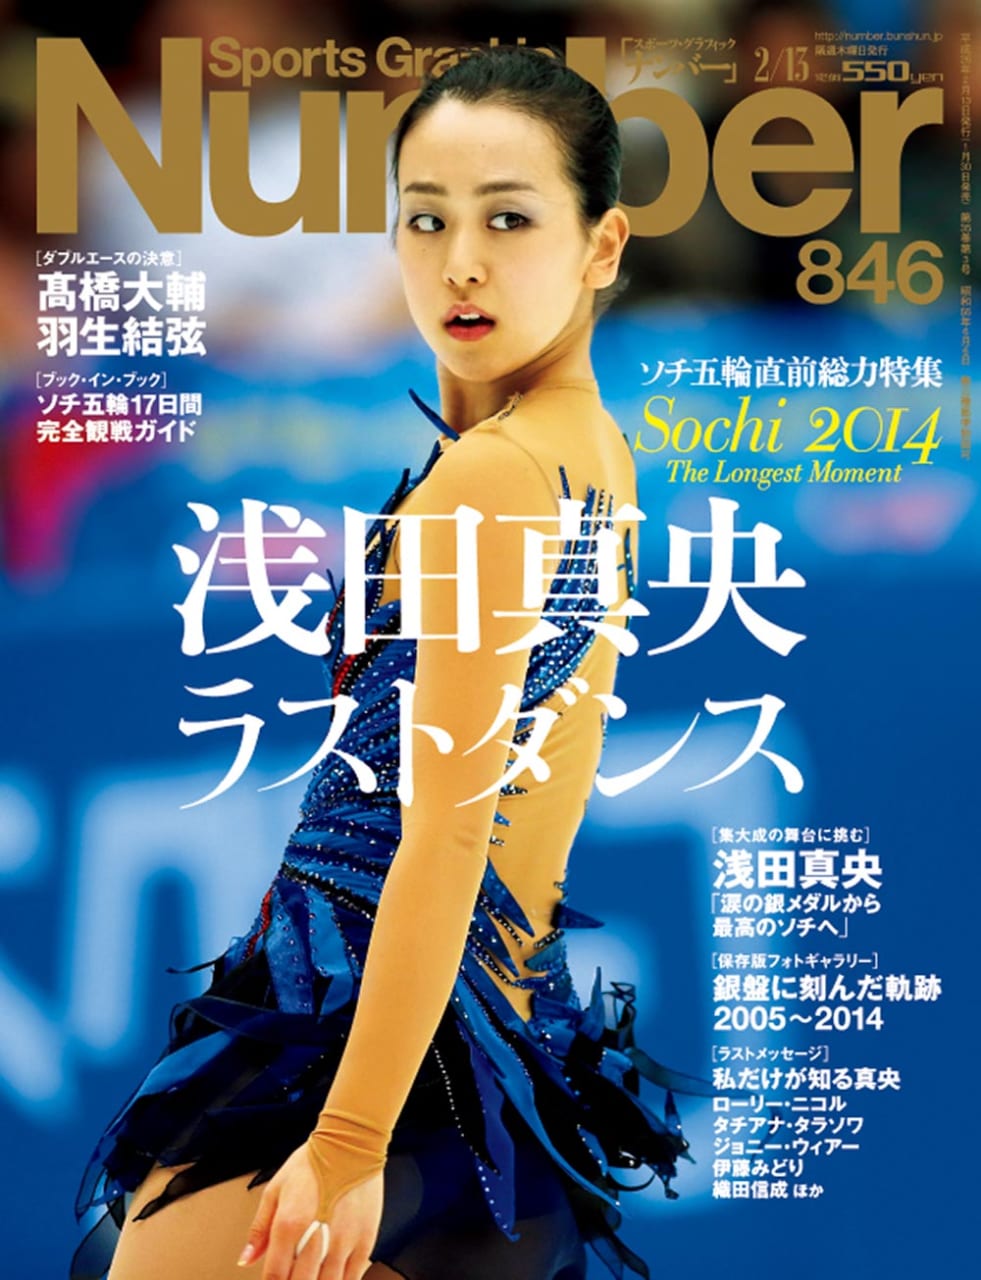 Sports Graphic Number 846号
2014年1月30日発売
表紙撮影：田口有史